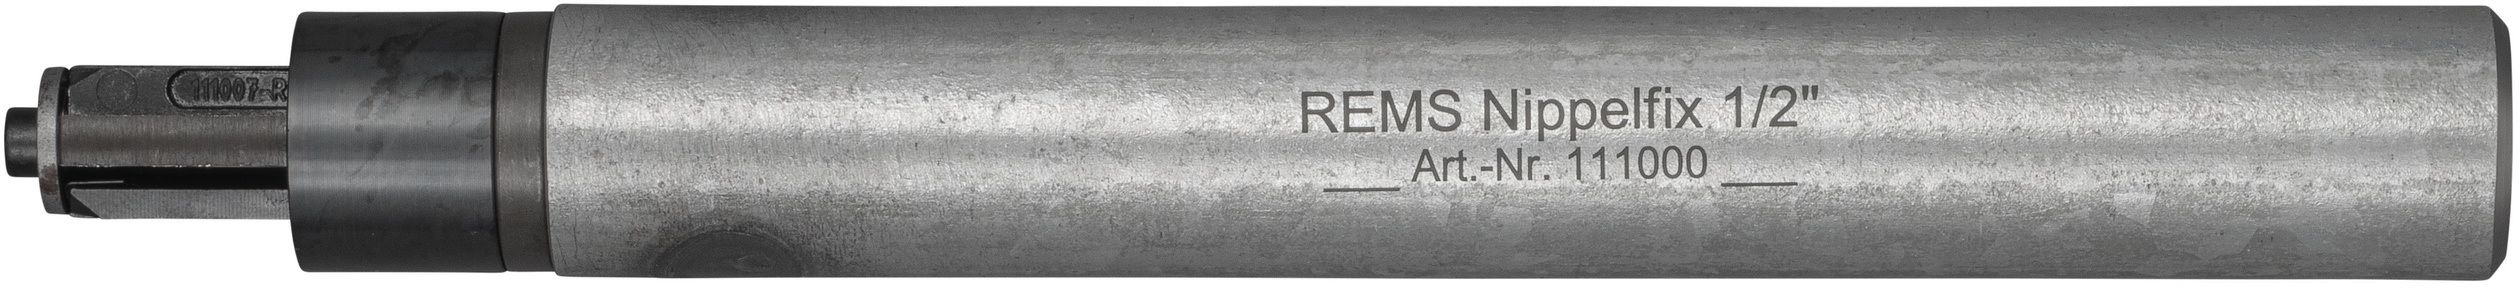 REMS Nippelfix 111200, 1" - Sanitärwerkzeuge